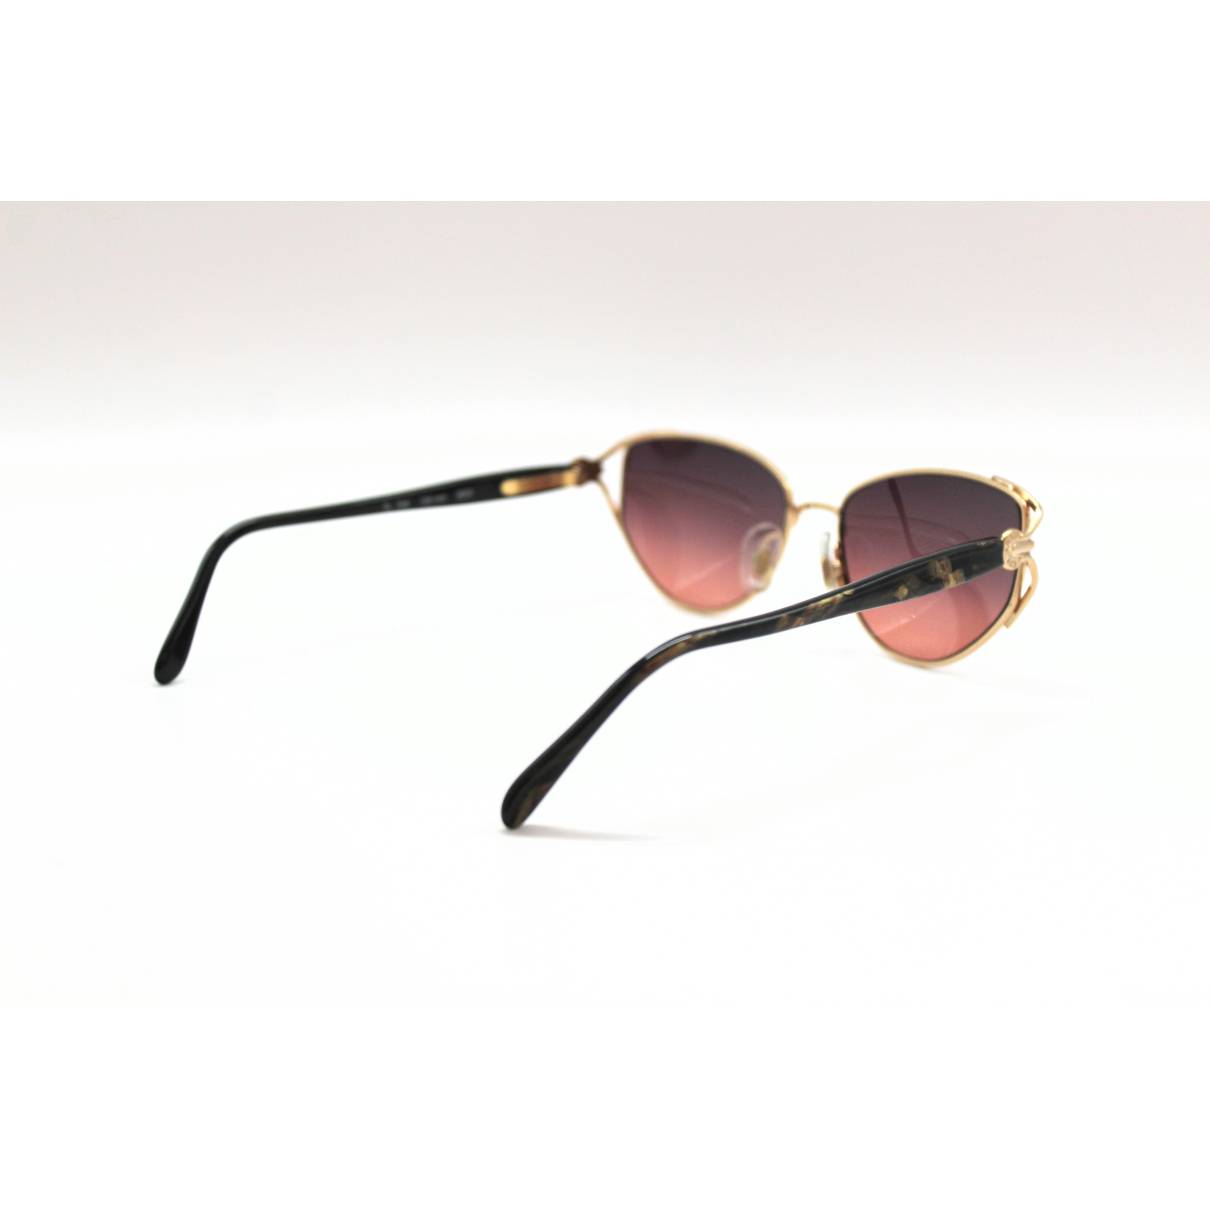 Buy Ted Lapidus Sunglasses online - Vintage